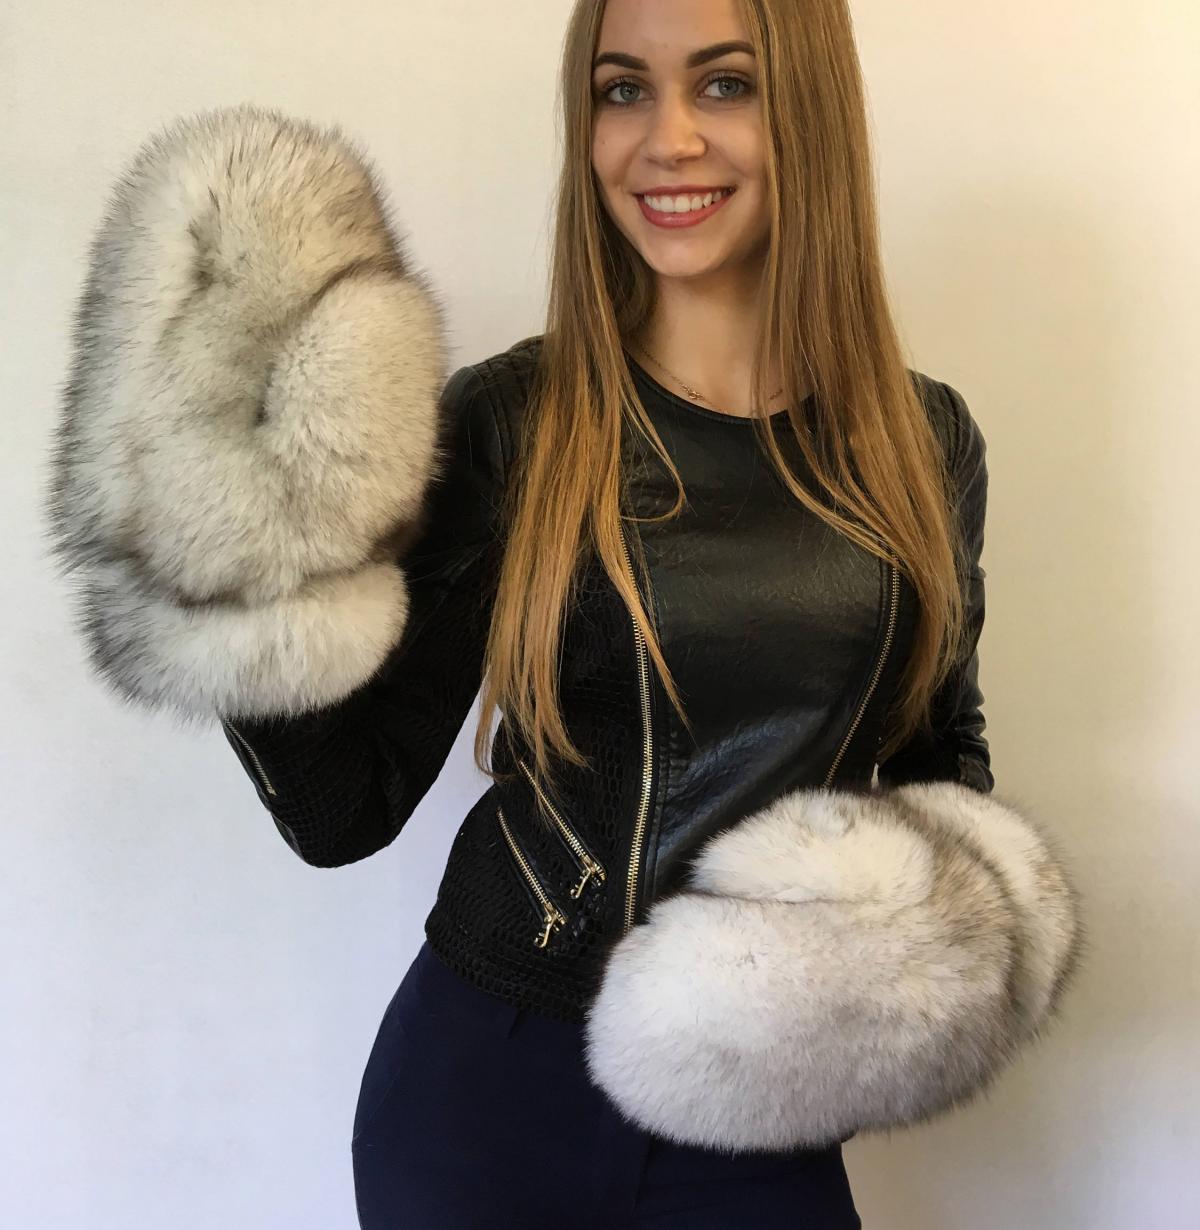 Giant Fur Mittens - Huge mittens